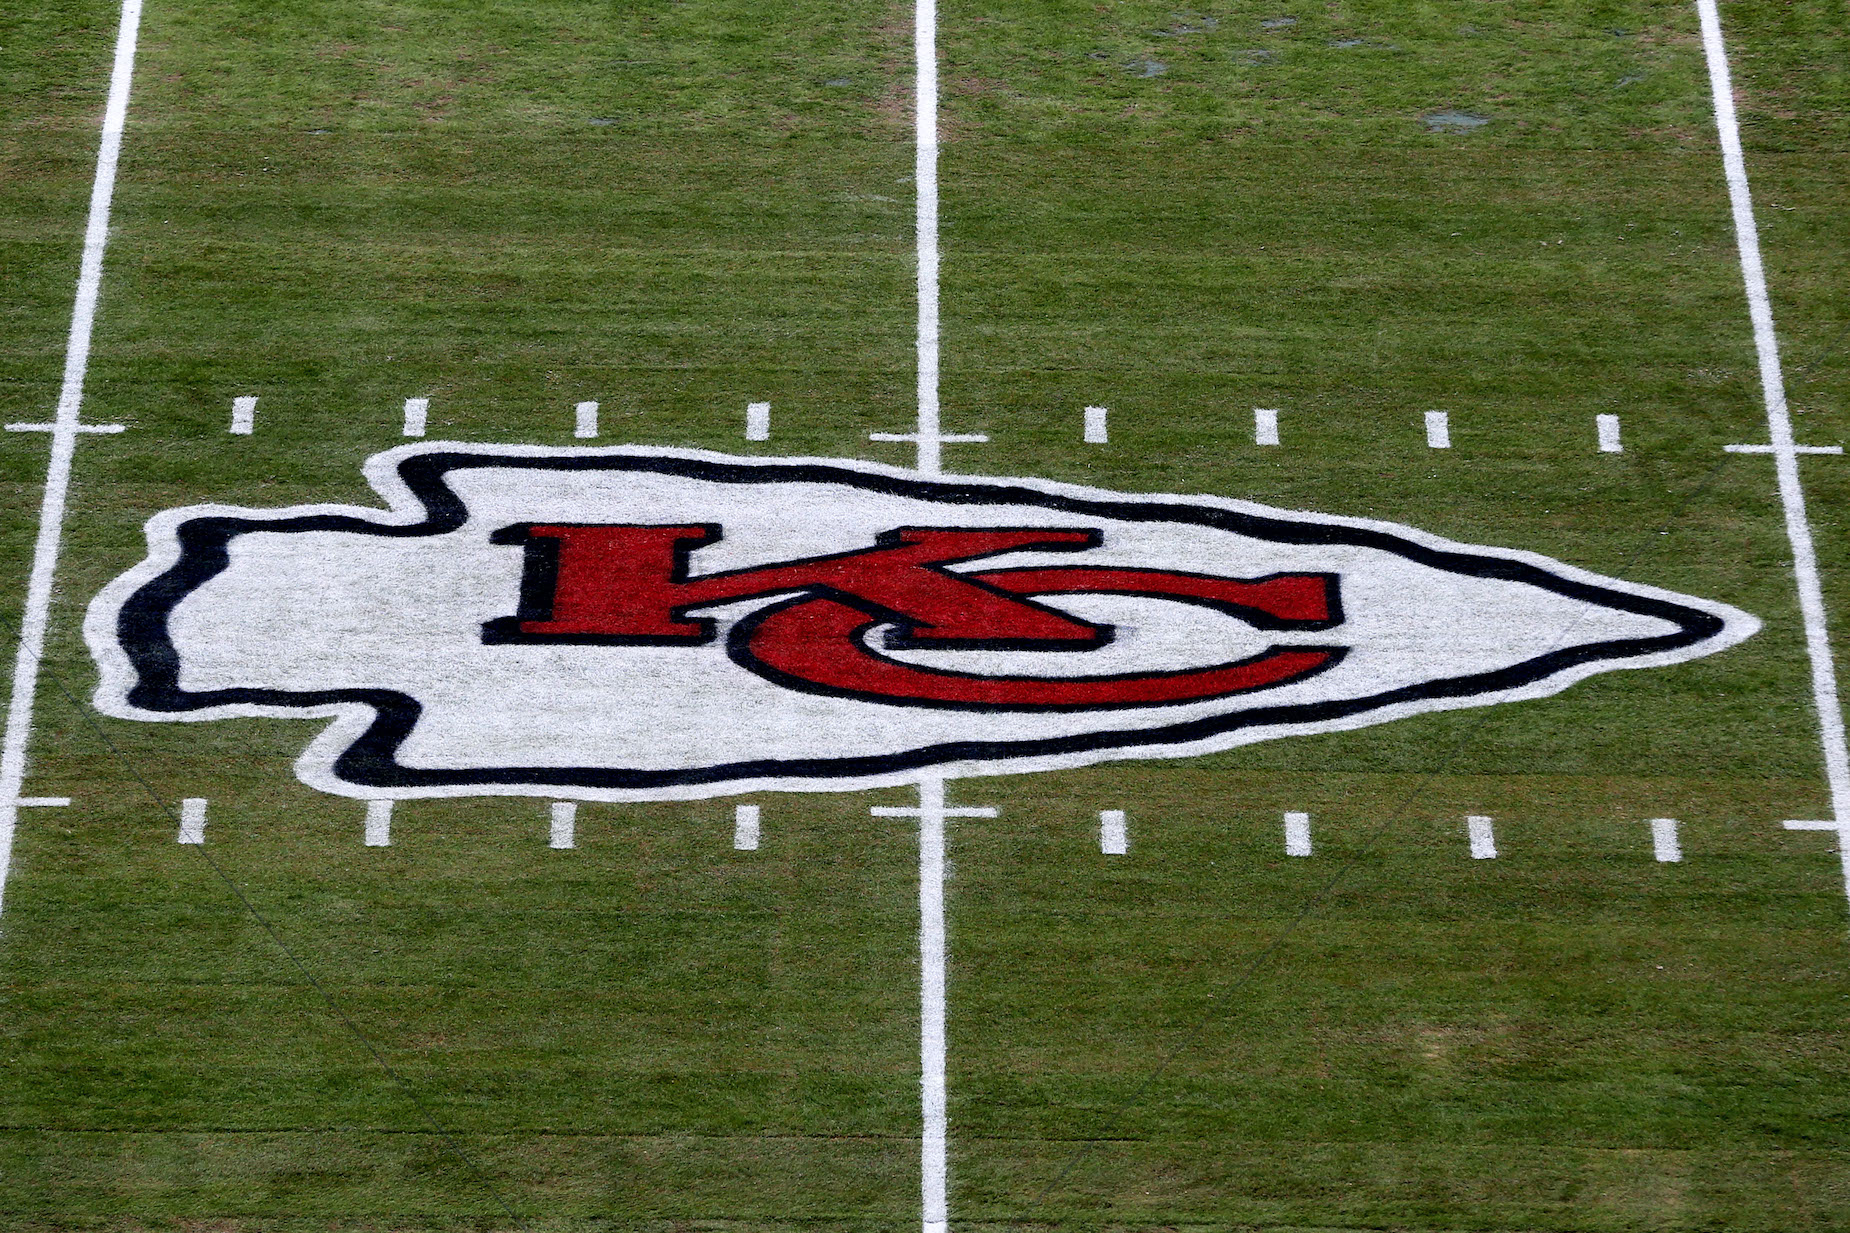 The Kansas City Chiefs logo painted on the field at Arrowhead Stadium.